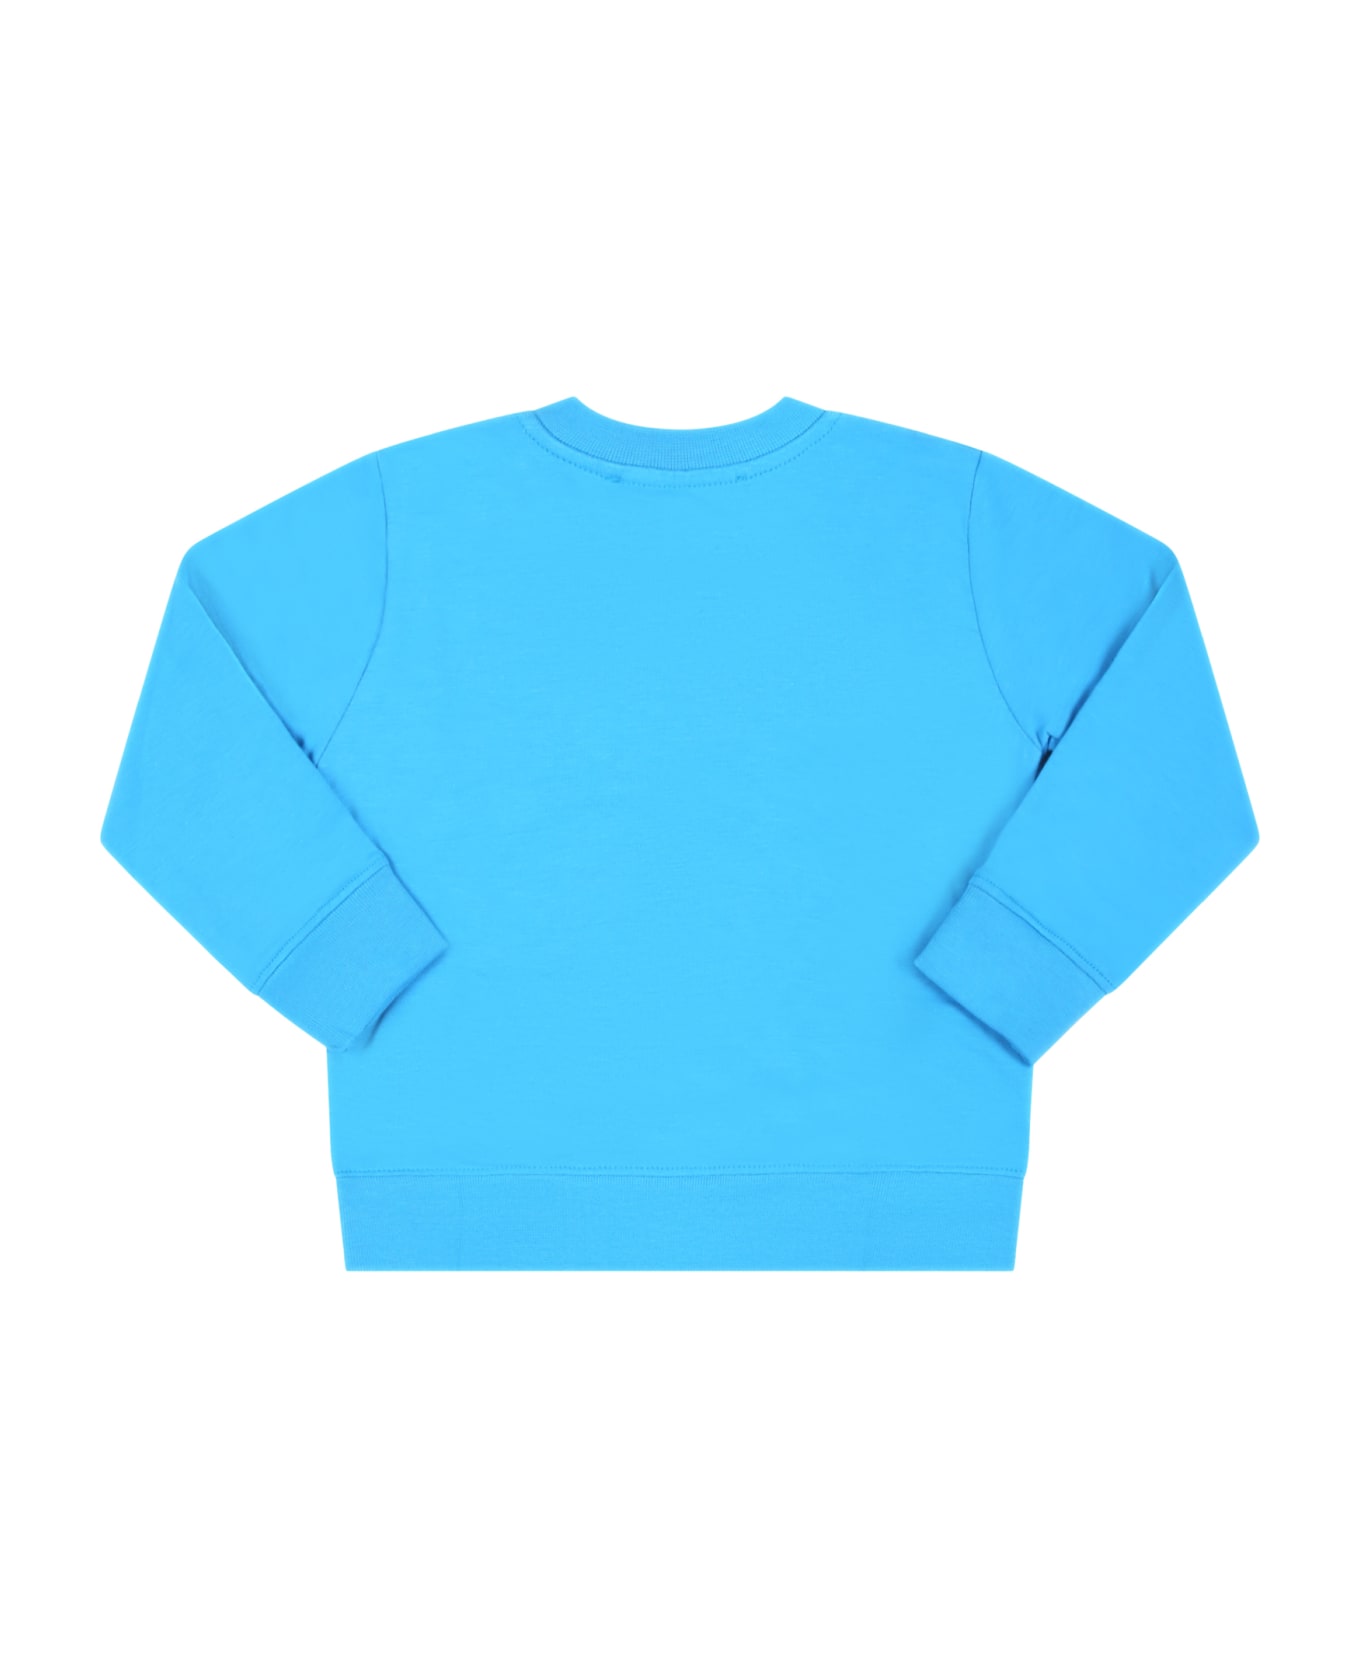 MSGM Light-blue Sweatshirt For Baby Boy With Multicolor Logo - Light Blue